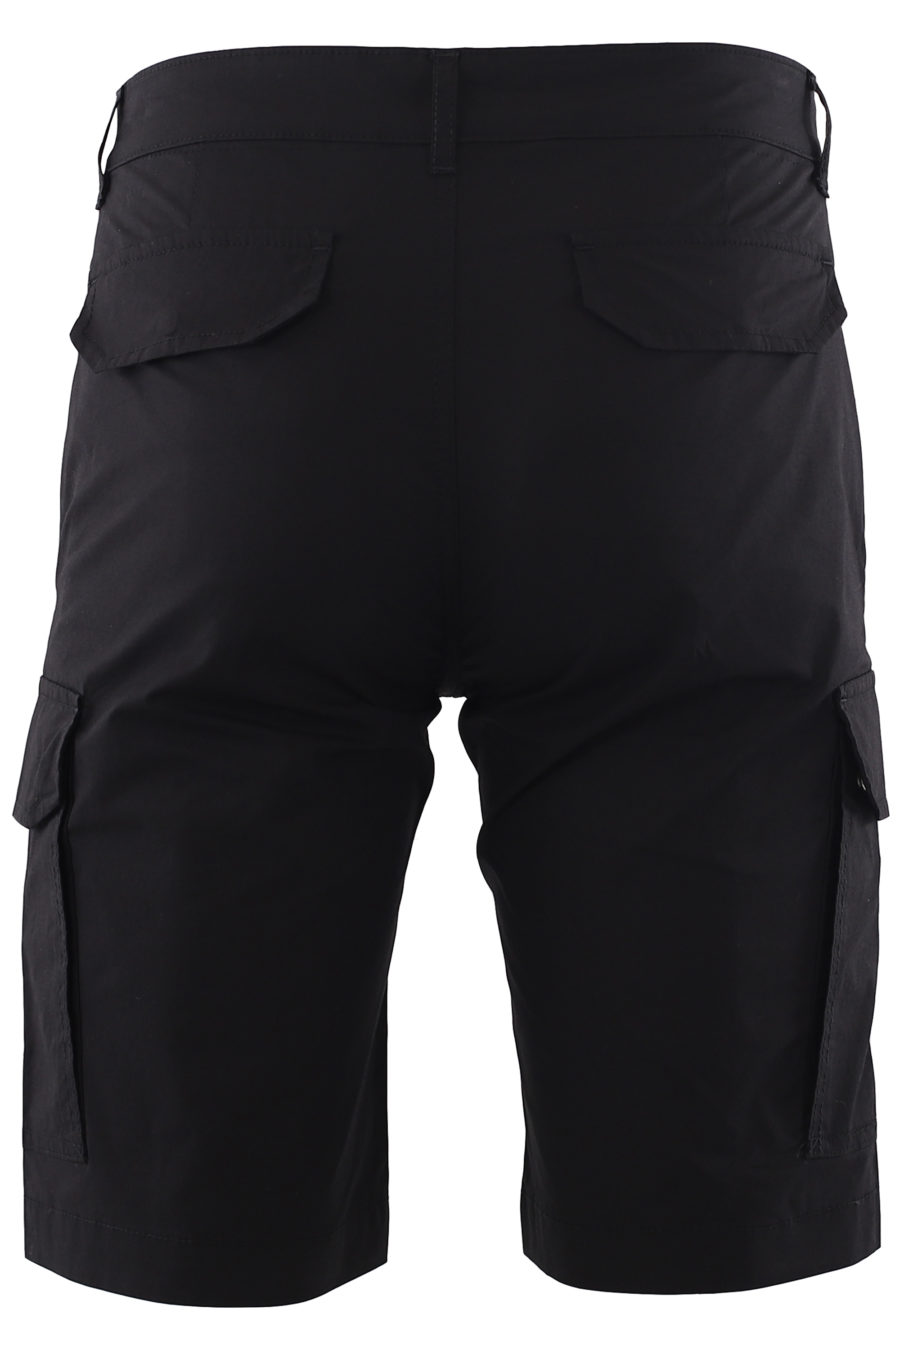 Pantalón corto negro cargo - IMG 6646